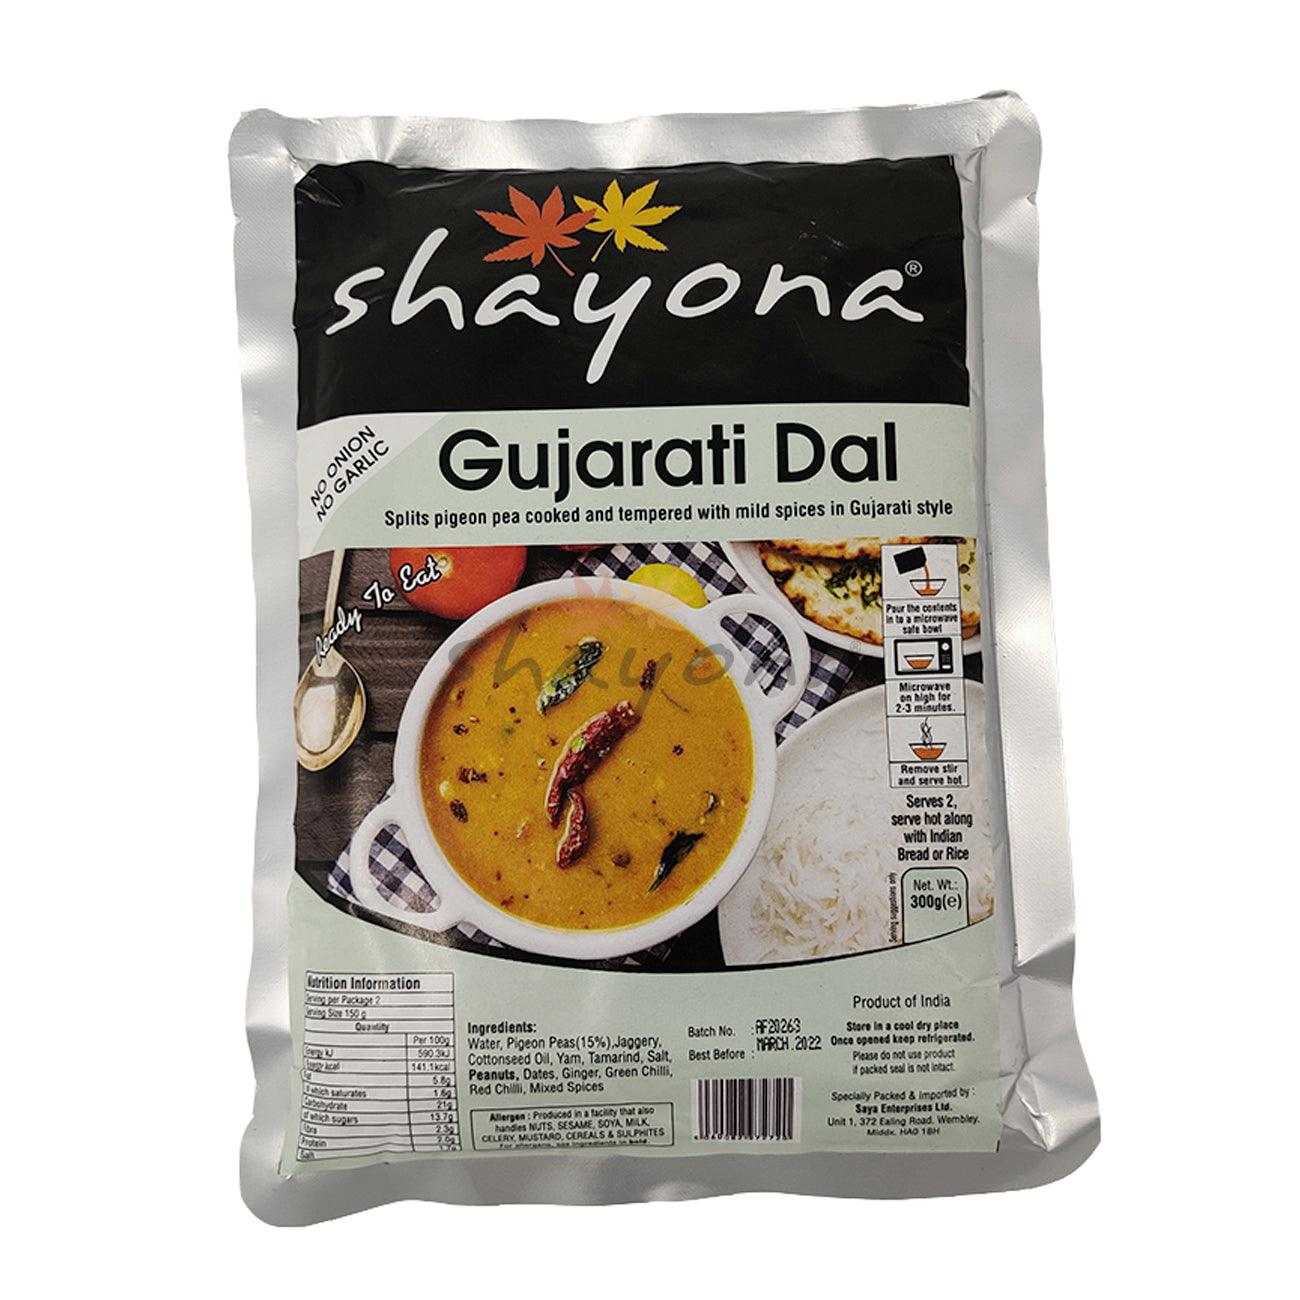 Shayona Gujarati Dal